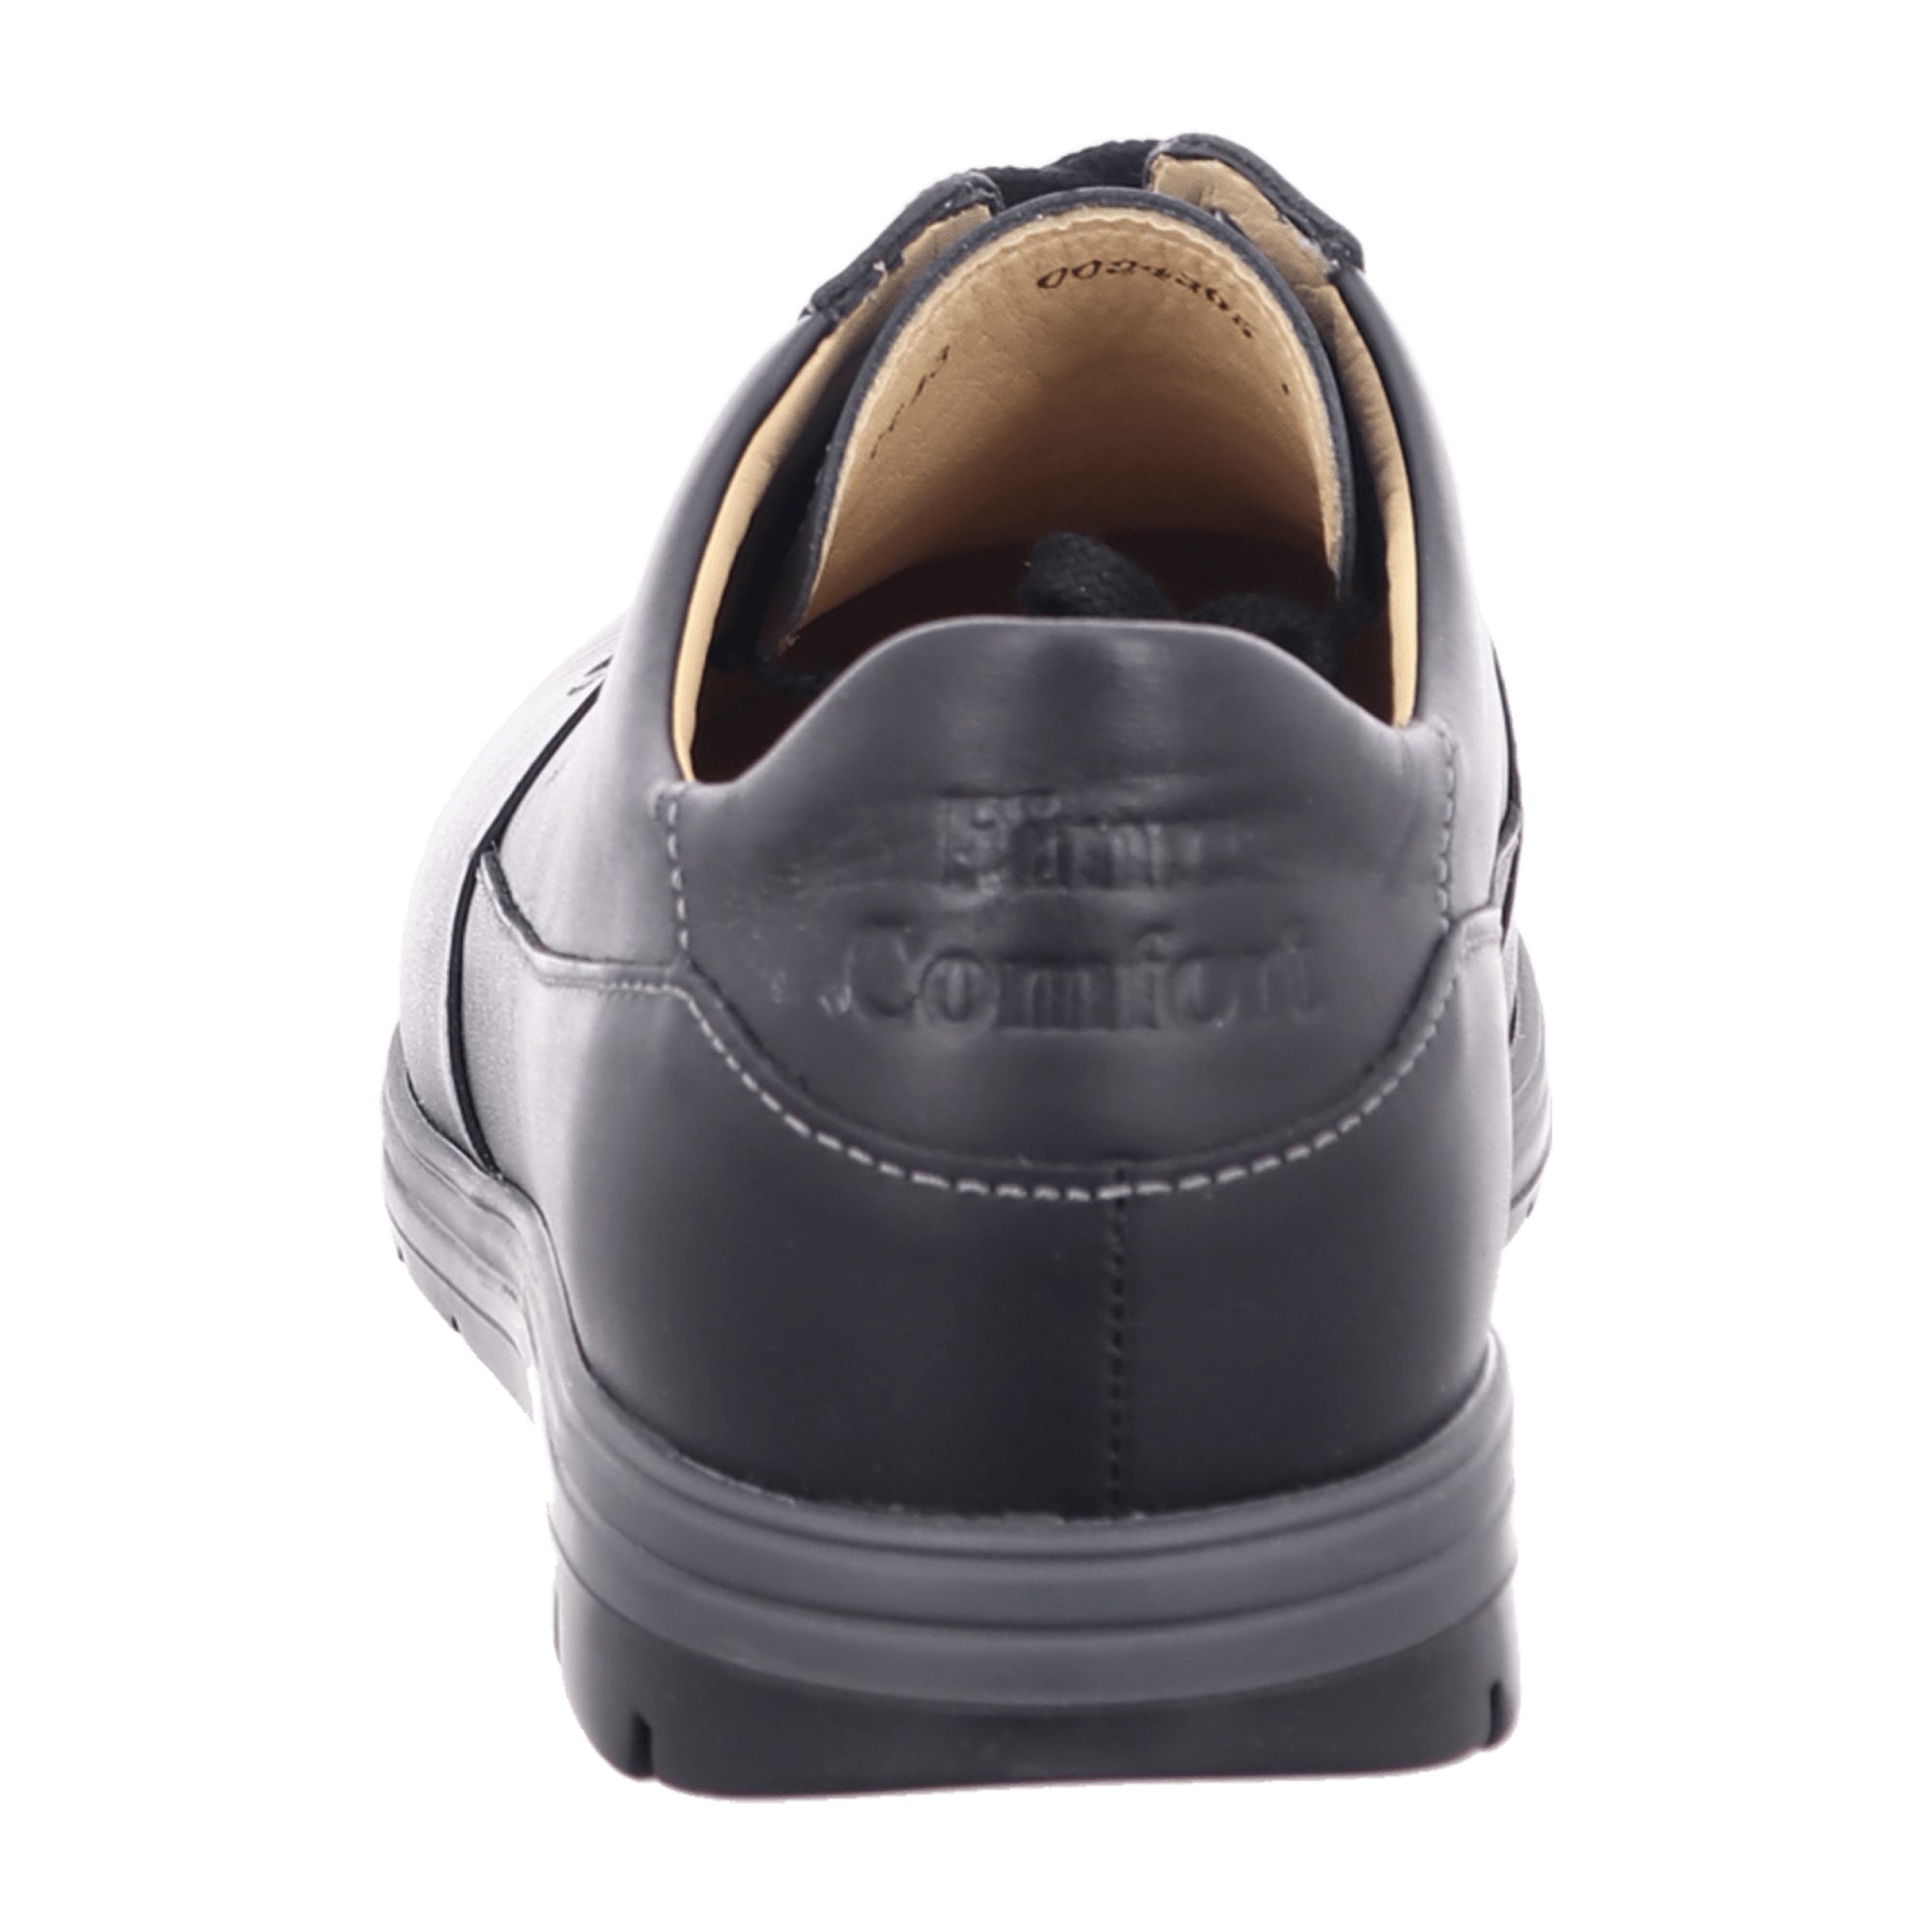 Finn Comfort Vernon Men's Comfortable Shoes - Stylish Black Leather